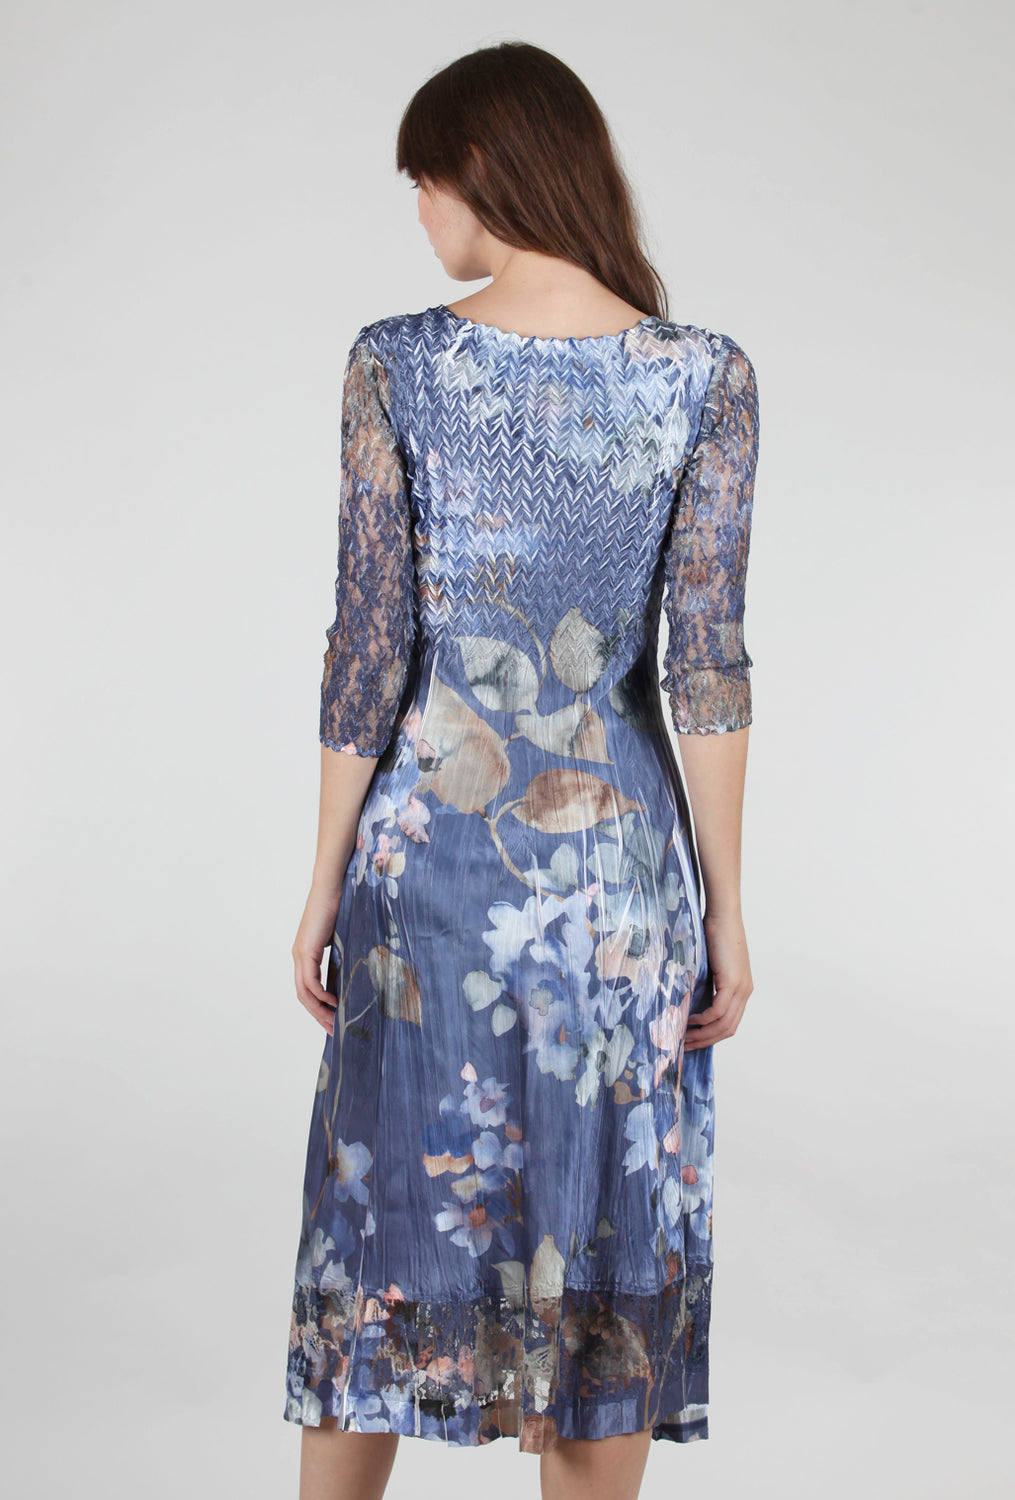 Komarov Lace Sleeve Watercolor Dress, Blossom 